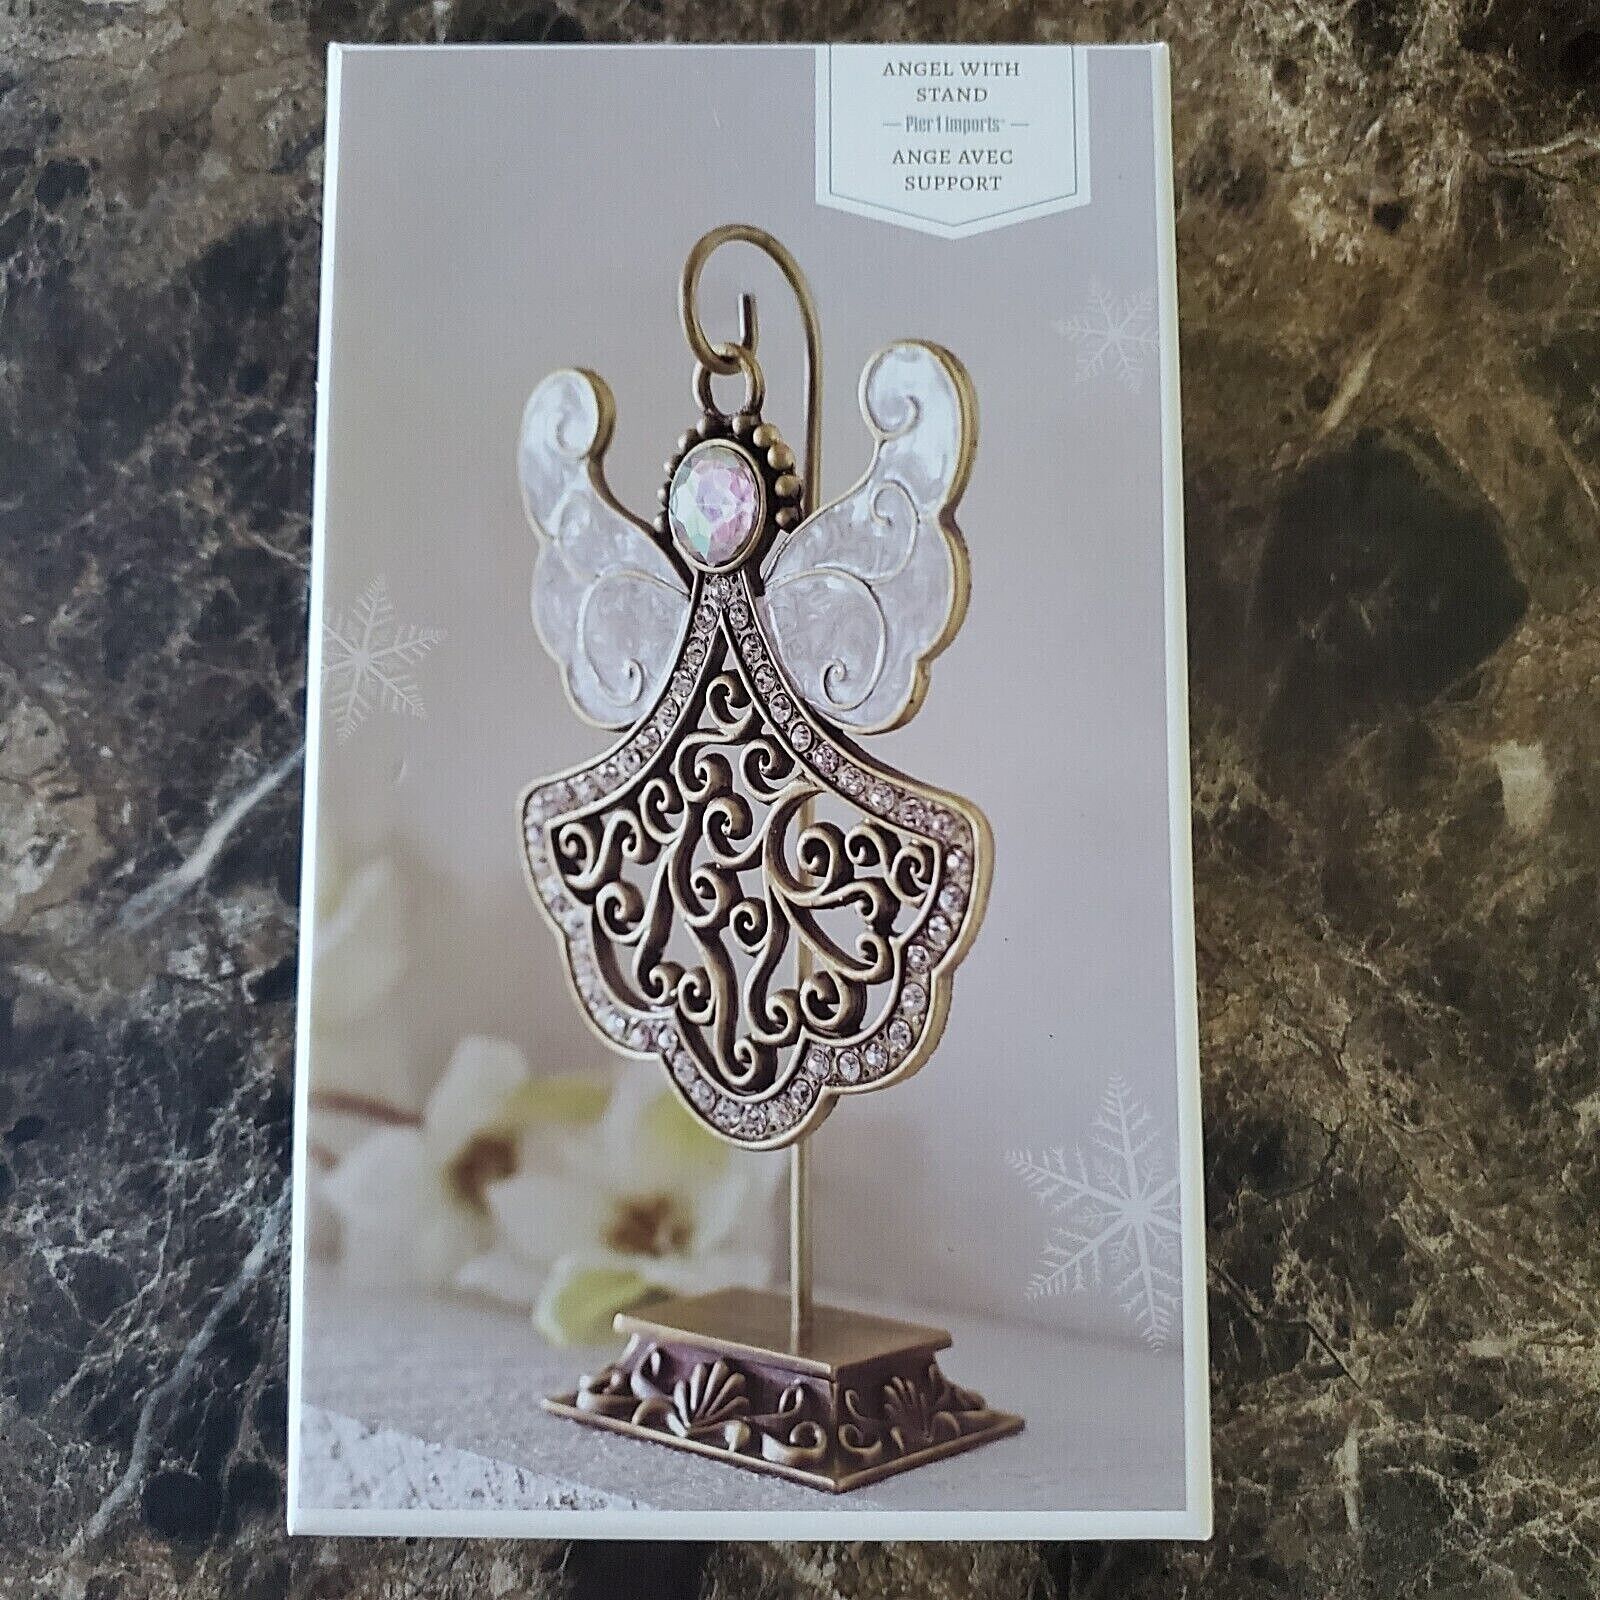 PIER 1 Imports GUARDIAN ANGEL Enamel Rhinestones Hanging Metal Ornament w/Stand